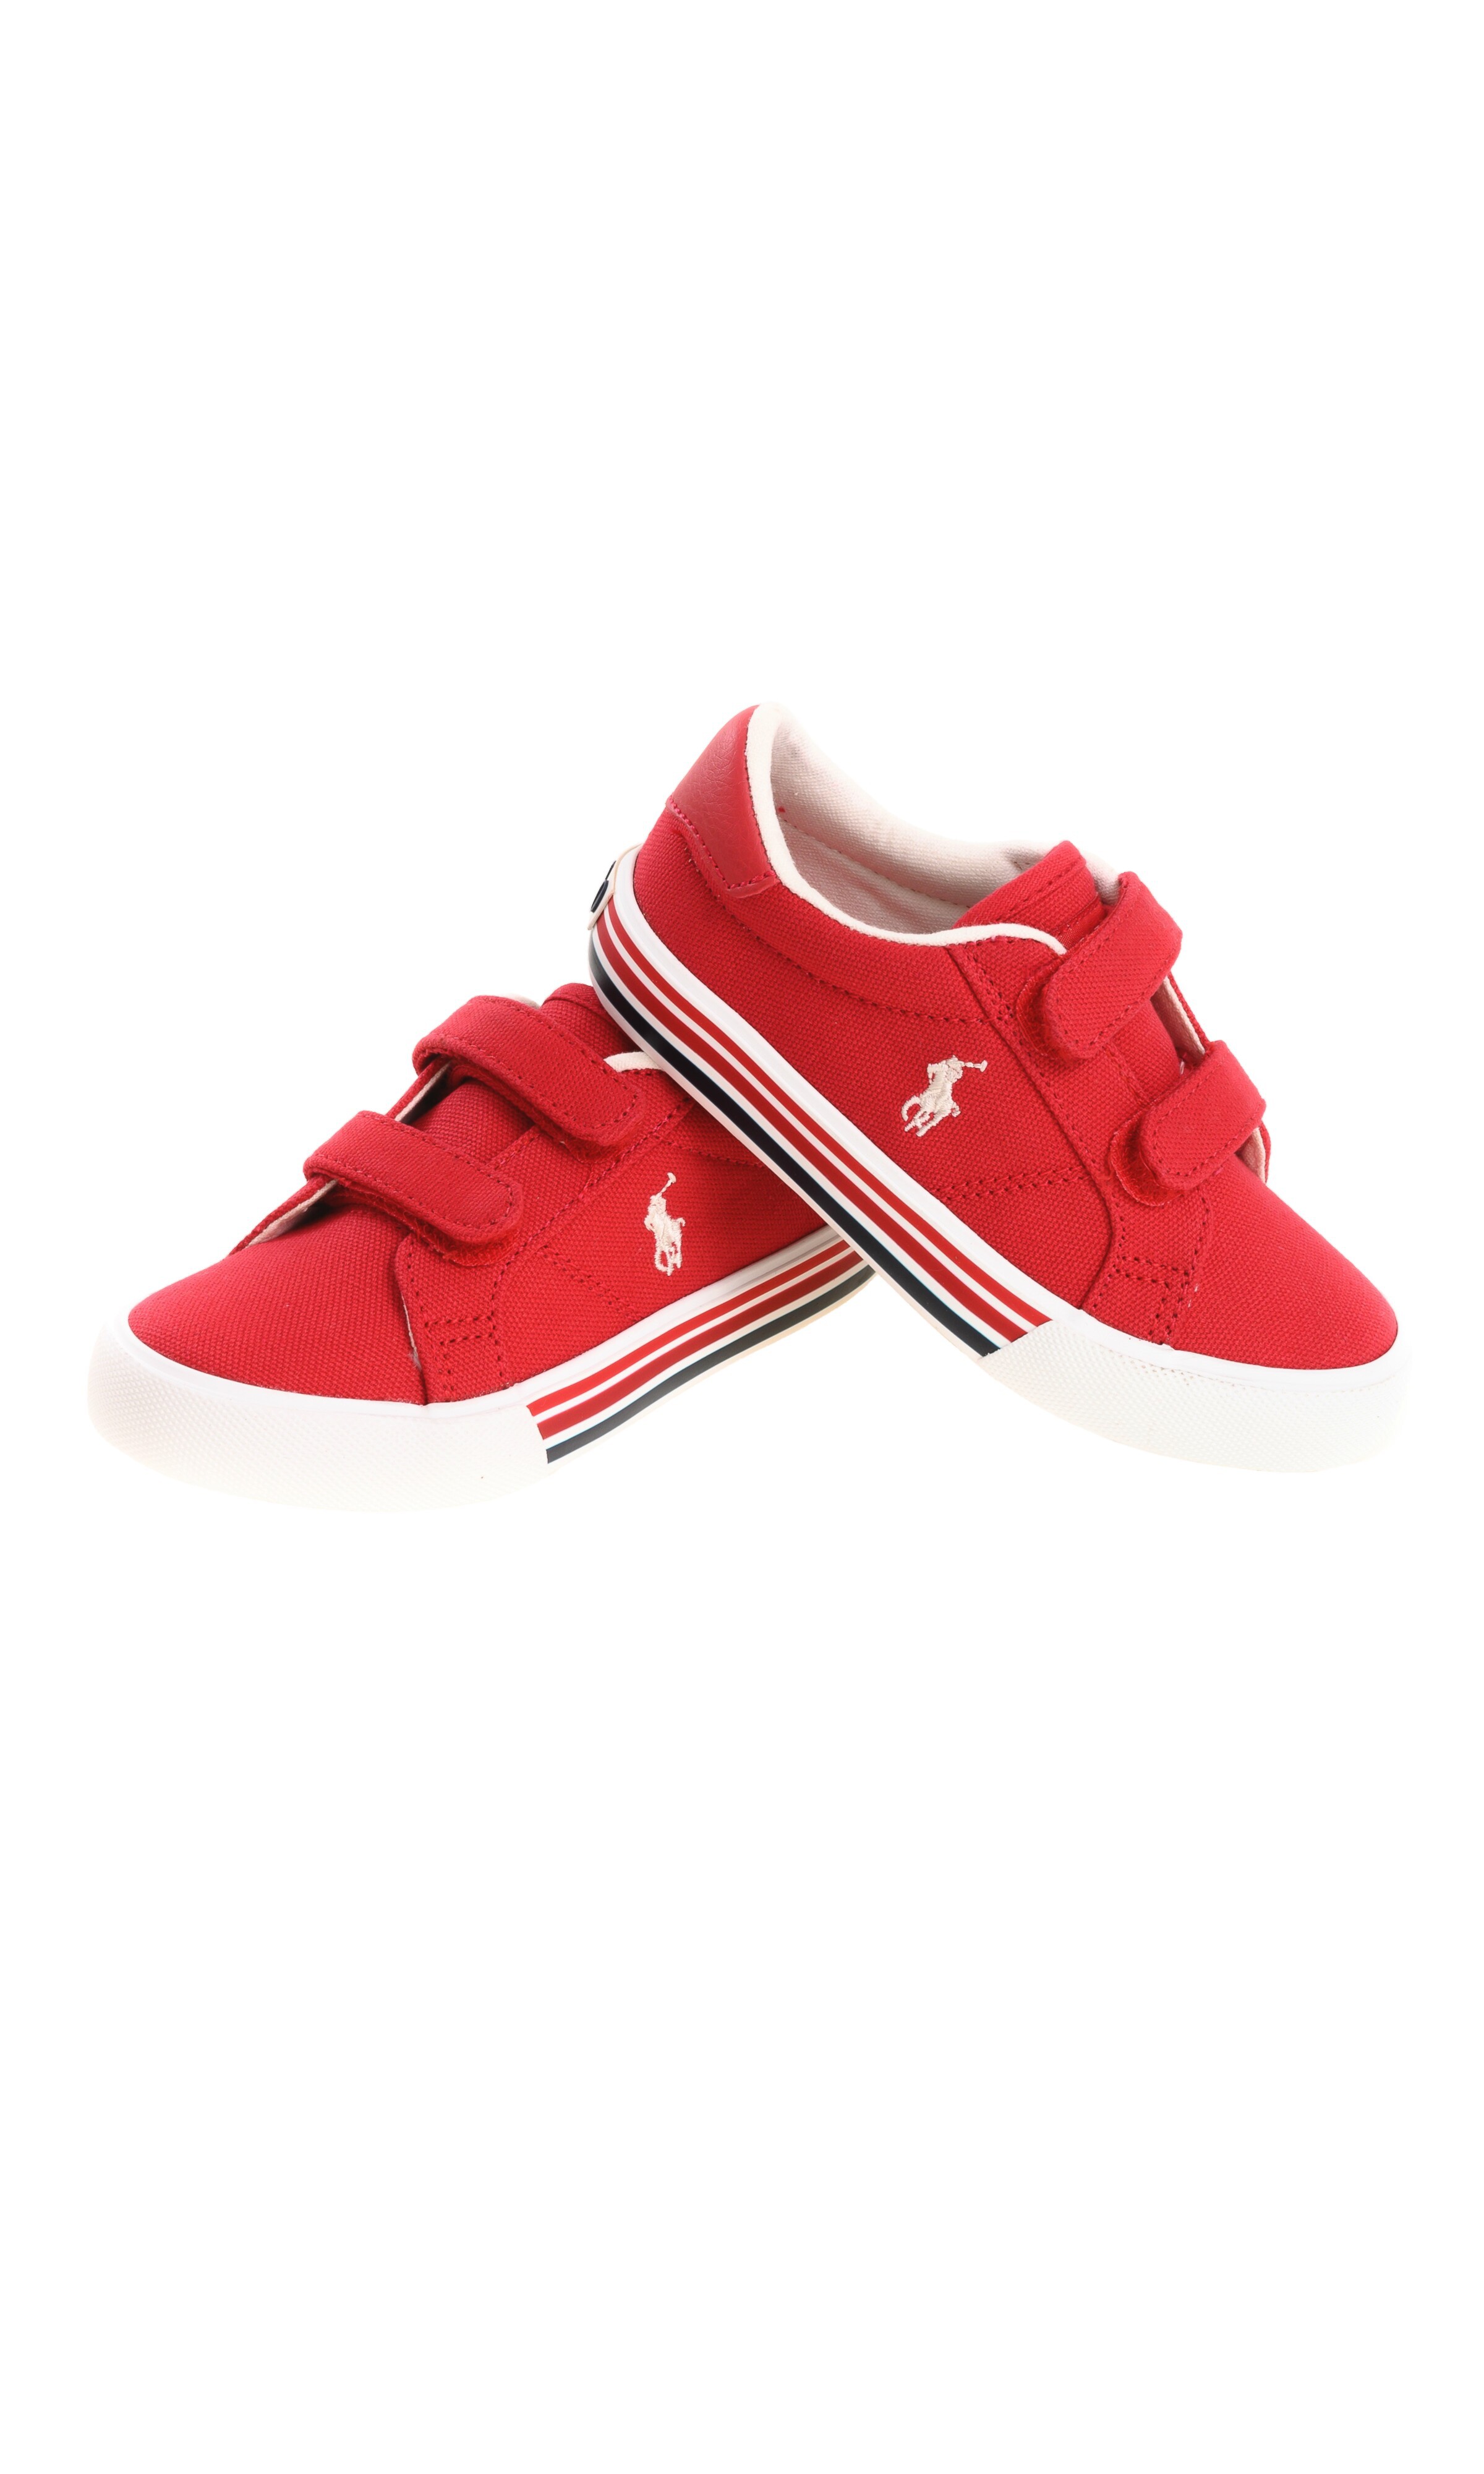 Red kids Velcro sneakers, Polo Ralph Lauren - Celebrity Club